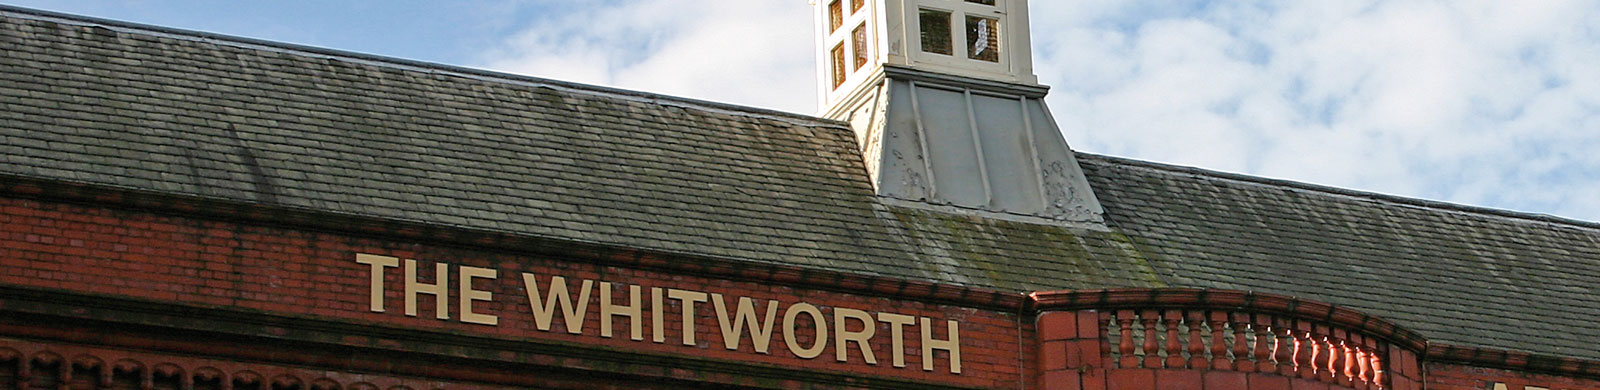 Whitworth Art Gallery